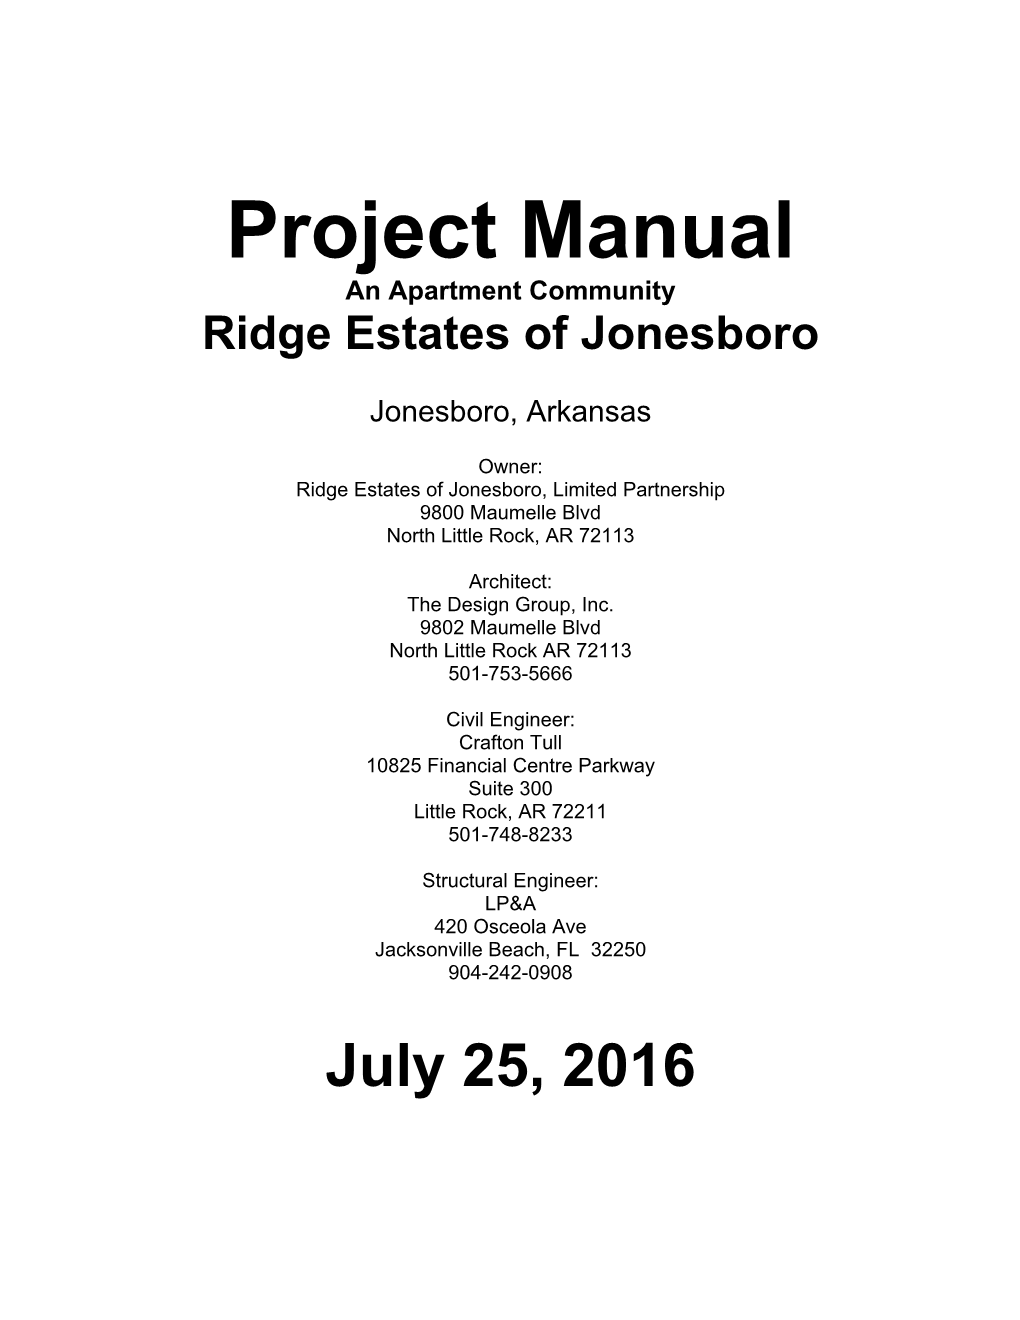 Project Manual an Apartment Community Ridge Estates of Jonesboro